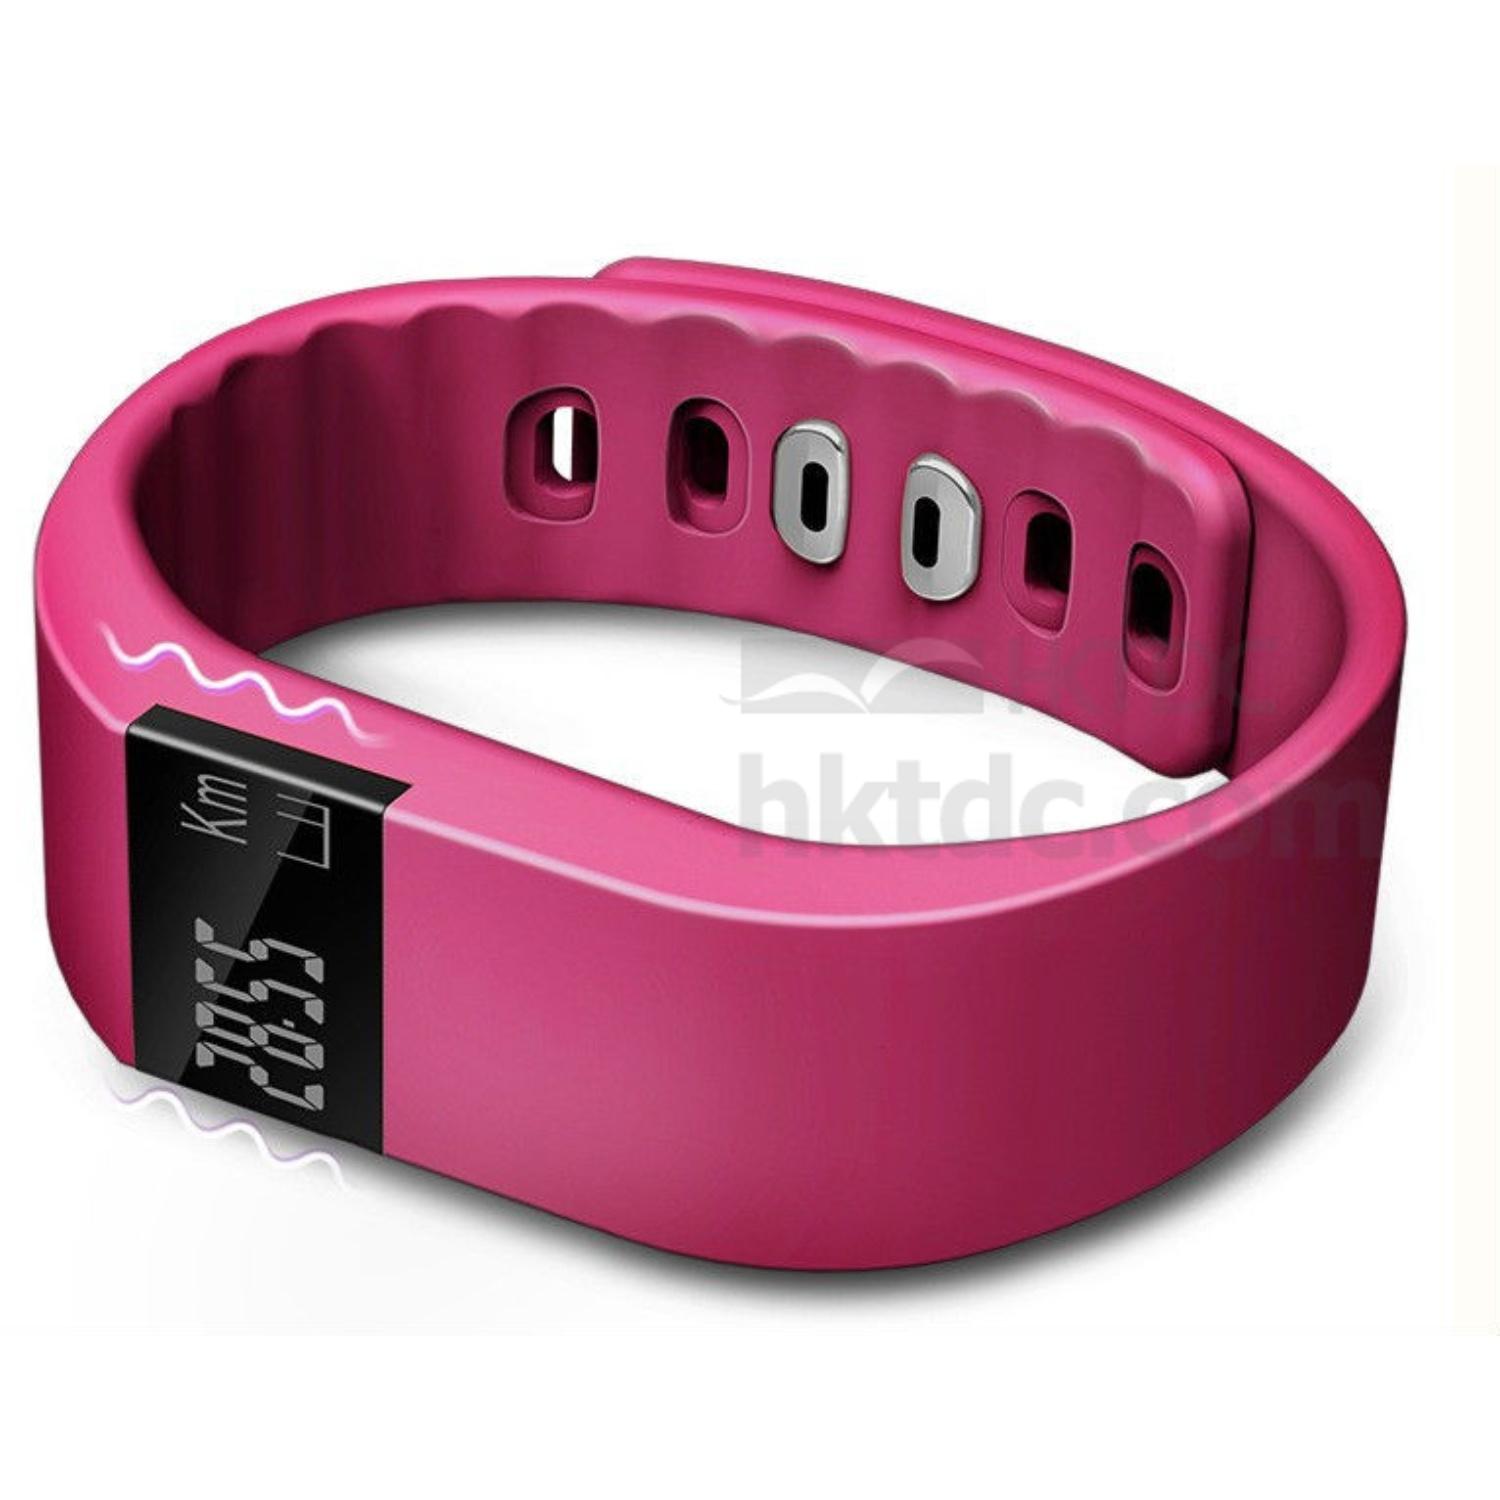 New 2016 Tw64 Bluetooth Smart Bracelet Fitness Tracker Pedometer Getfit  Source Manufacturer  China Smart Bracelet and Fitness Tracker price   MadeinChinacom